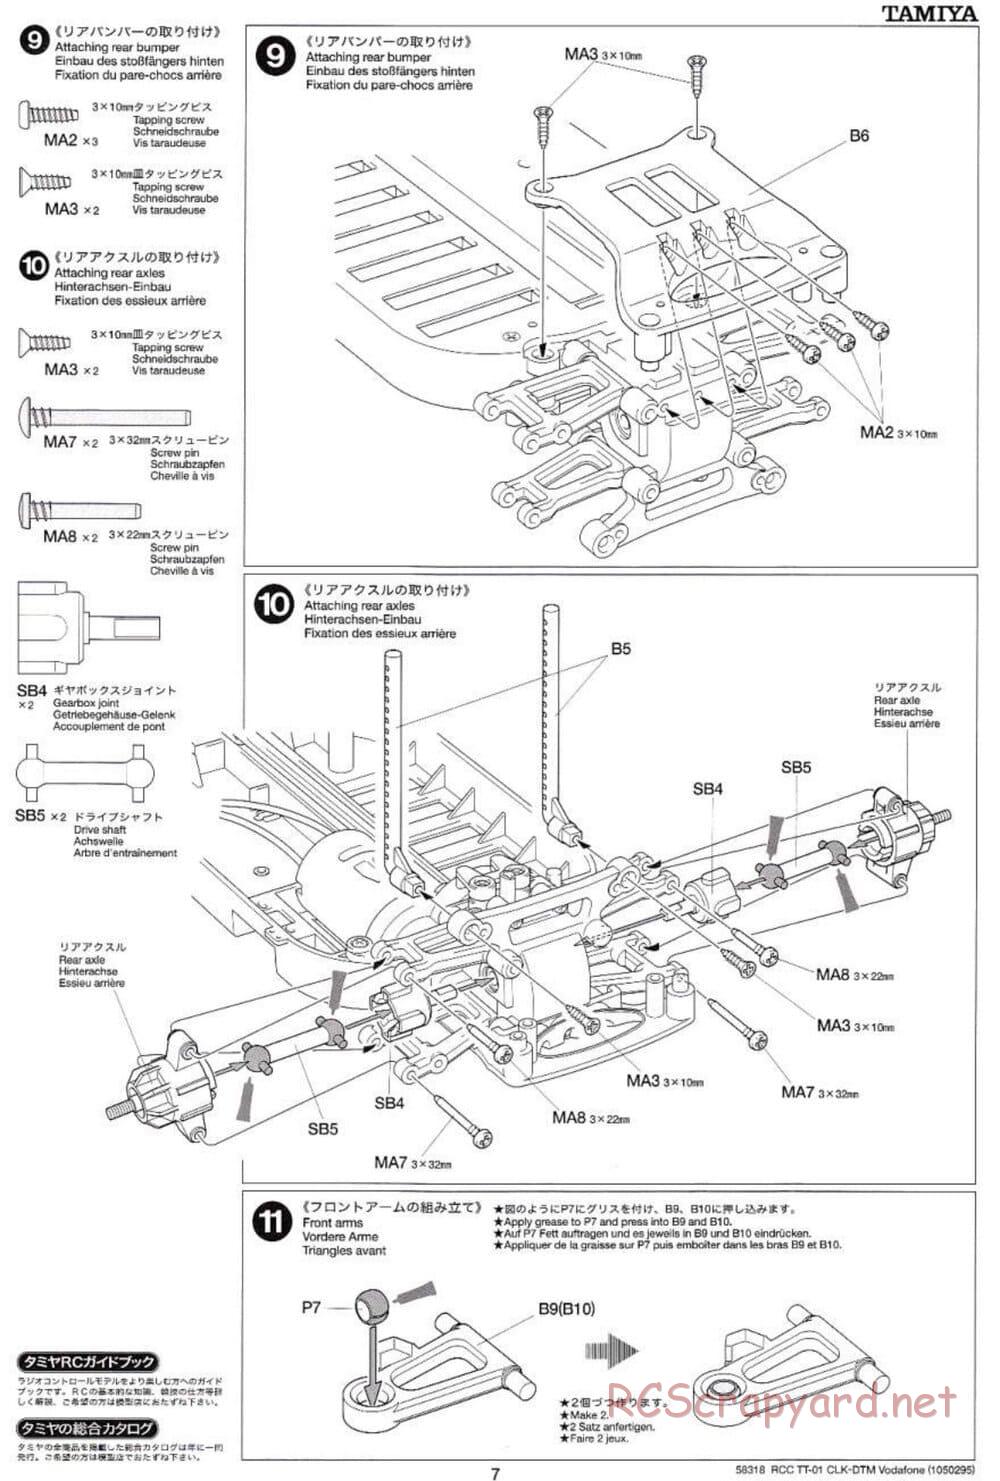 Tamiya - Mercedes-Benz CLK-DTM Team Vodafone AMG-Mercedes - TT-01 Chassis - Manual - Page 7